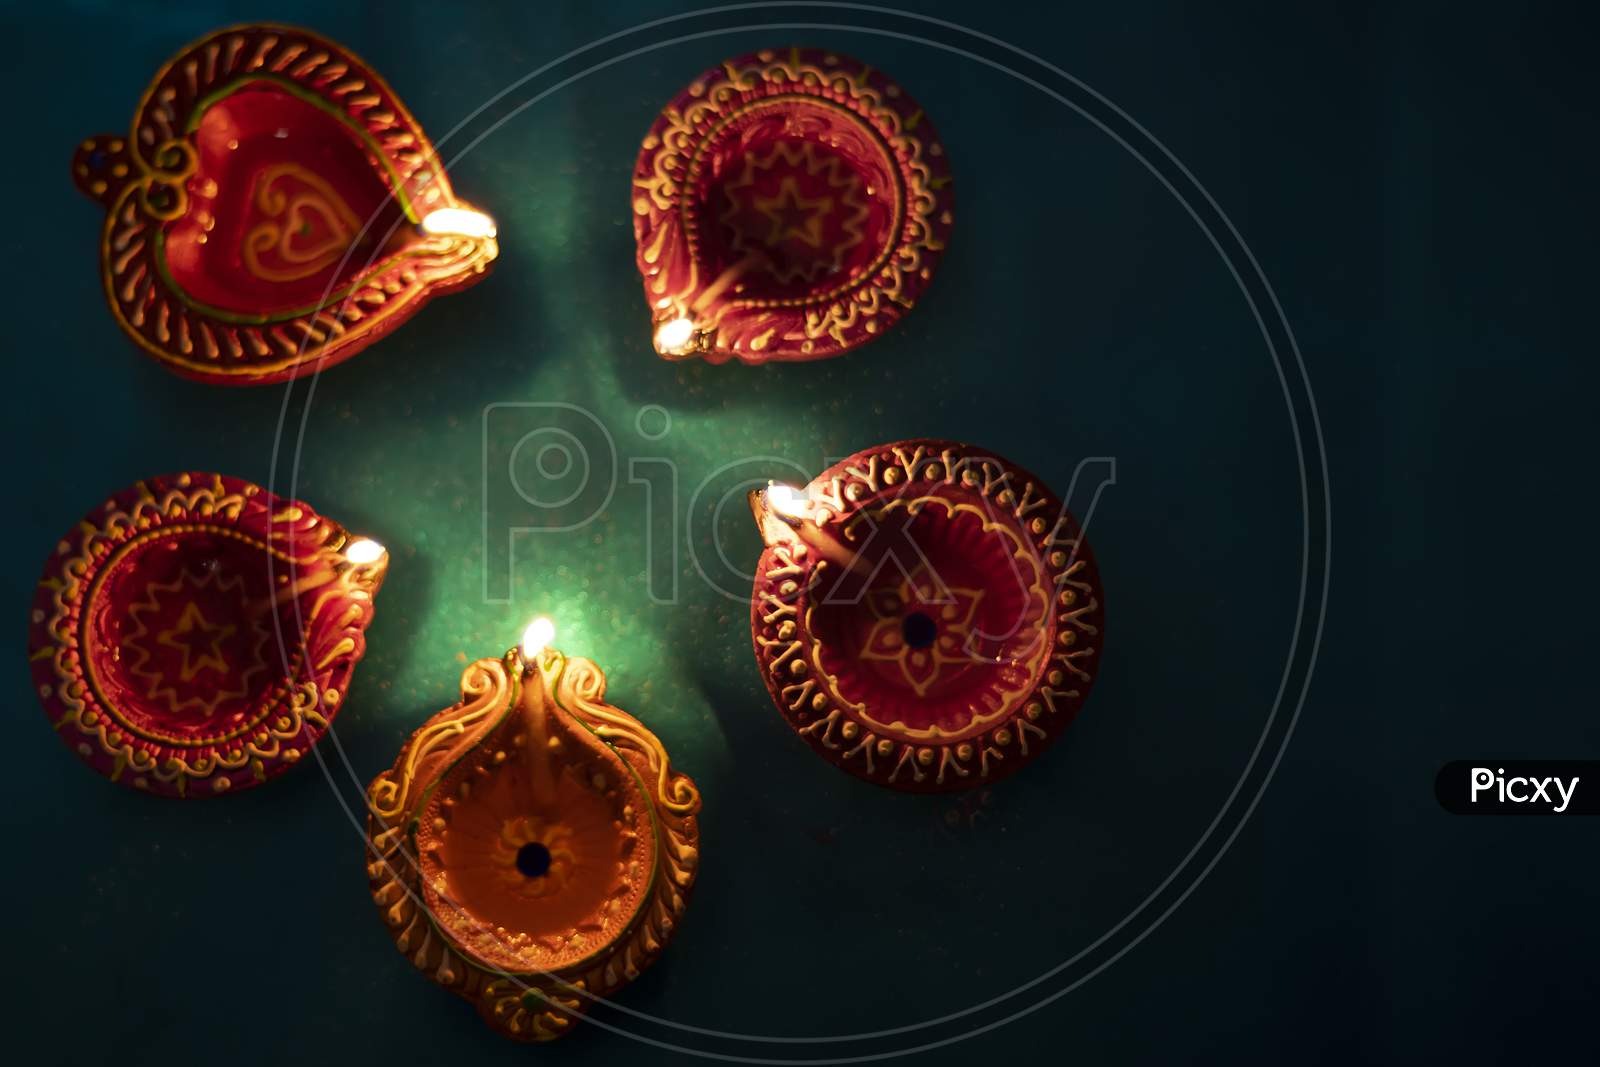 Colorful Clay Diya Lamps Lit During Diwali Celebration